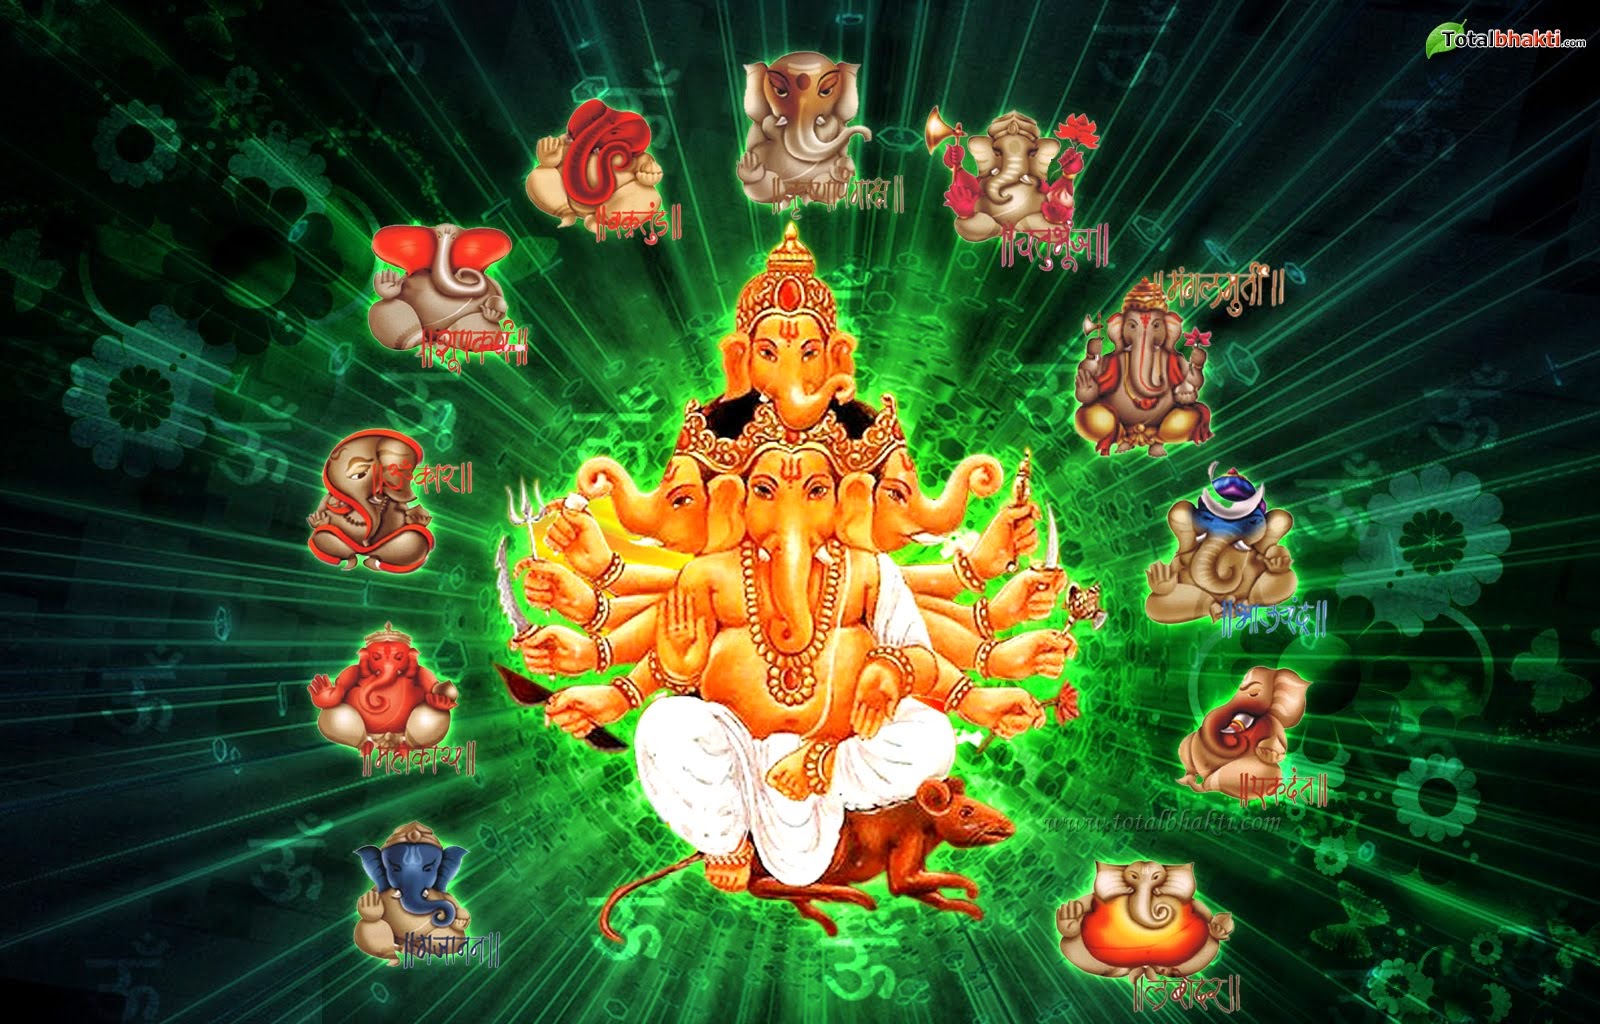 Lord Vinayaka Ganesh HD wallpapers images pictures photos - Ani Tips -  .COM